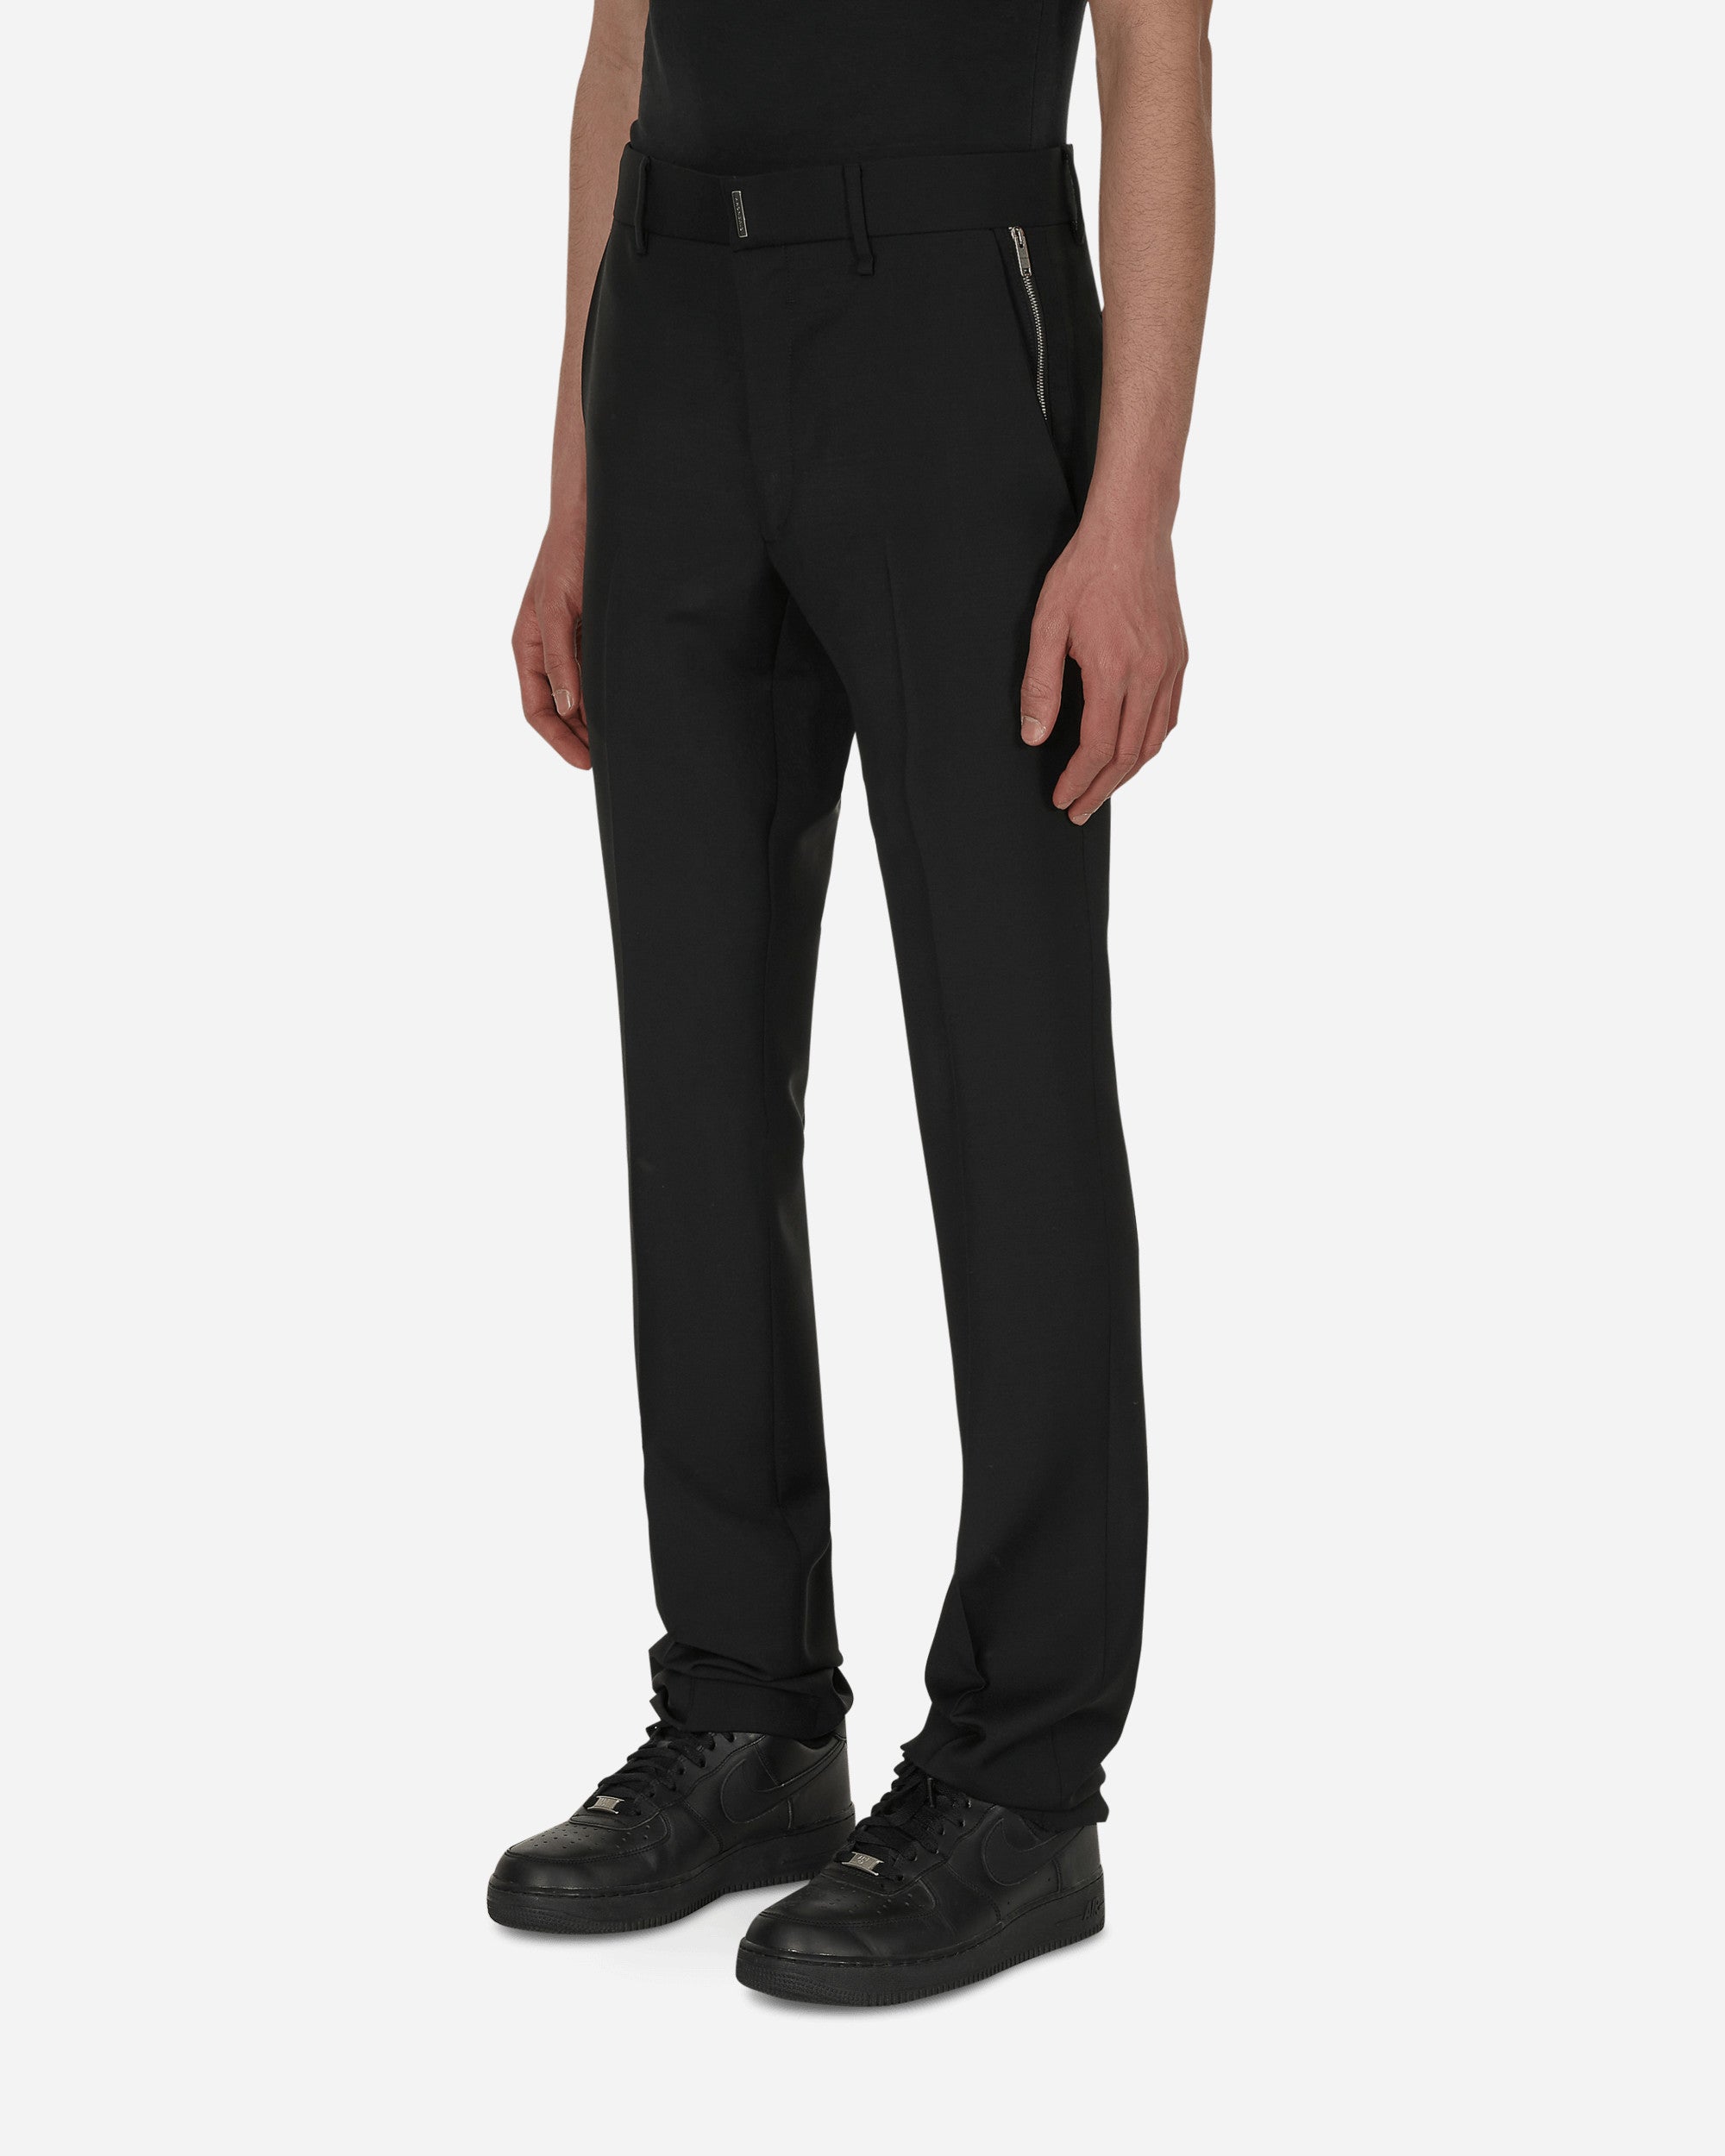 Givenchy Classic Fit Trousers W/ Zip Details Black/Silvery Pants Trousers BM50ZC100H 008